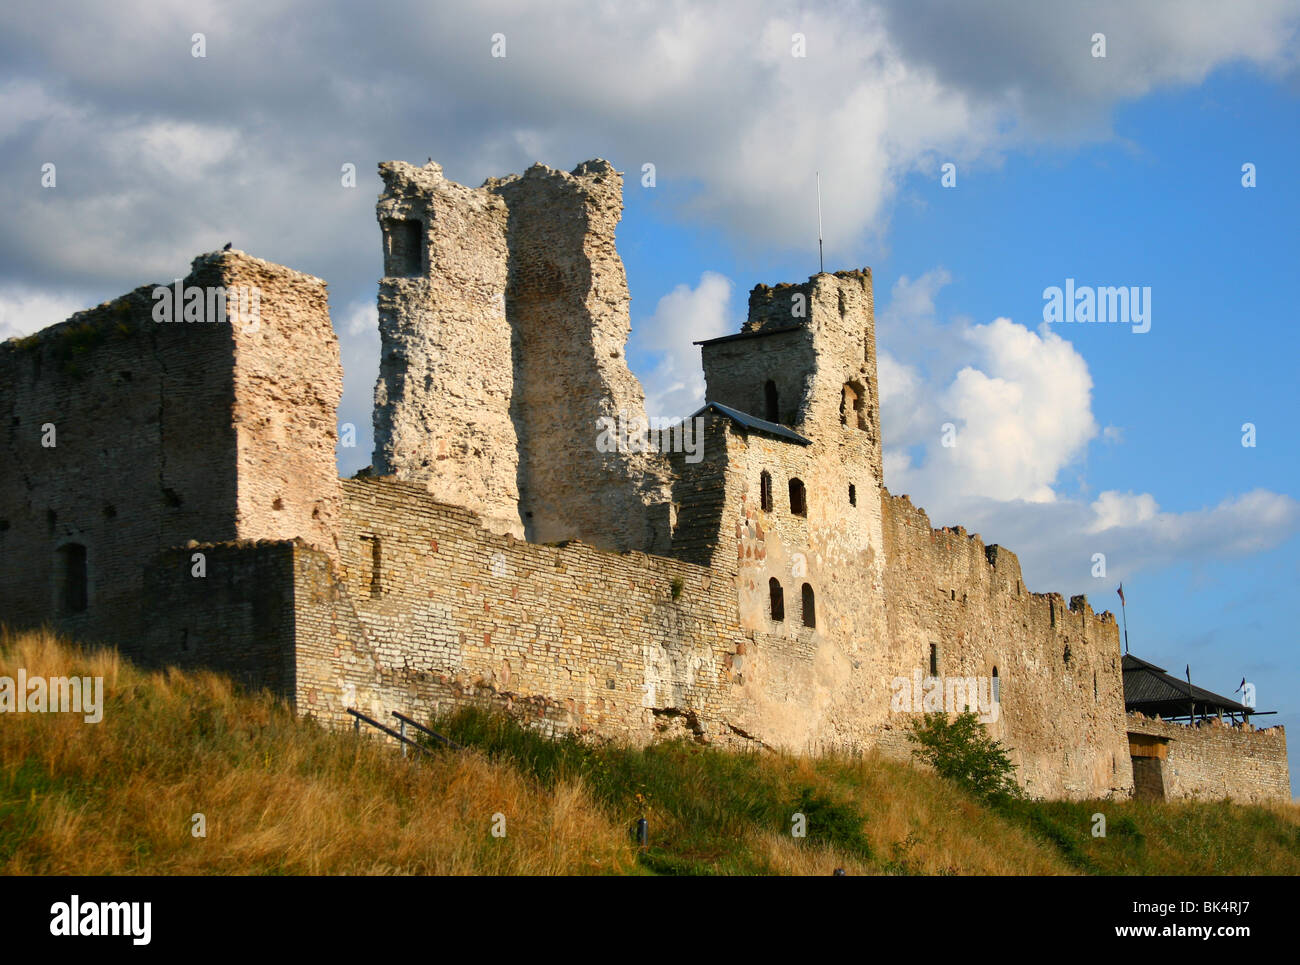 Medieval castle in Rakvere, Estonia. Castle of 14th century of the Livonian Order Stock Photo